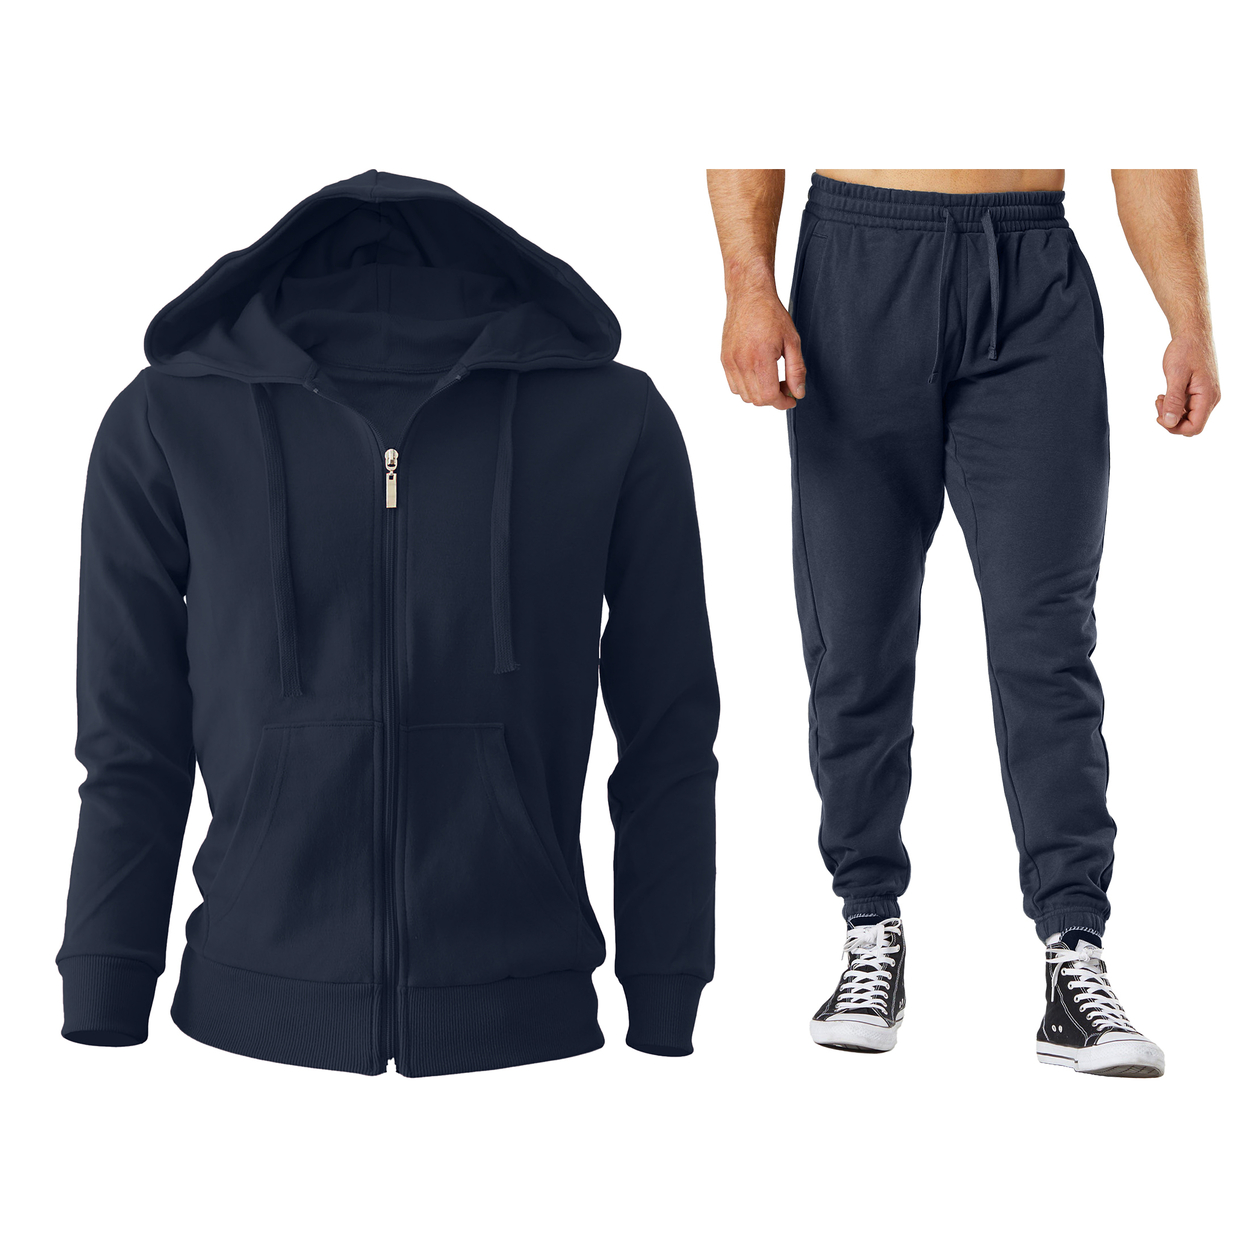 2-Piece: Men's Winter Warm Cozy Athletic Multi-Pockets BIG & TALL Sweatsuit Set - Charcoal, Large